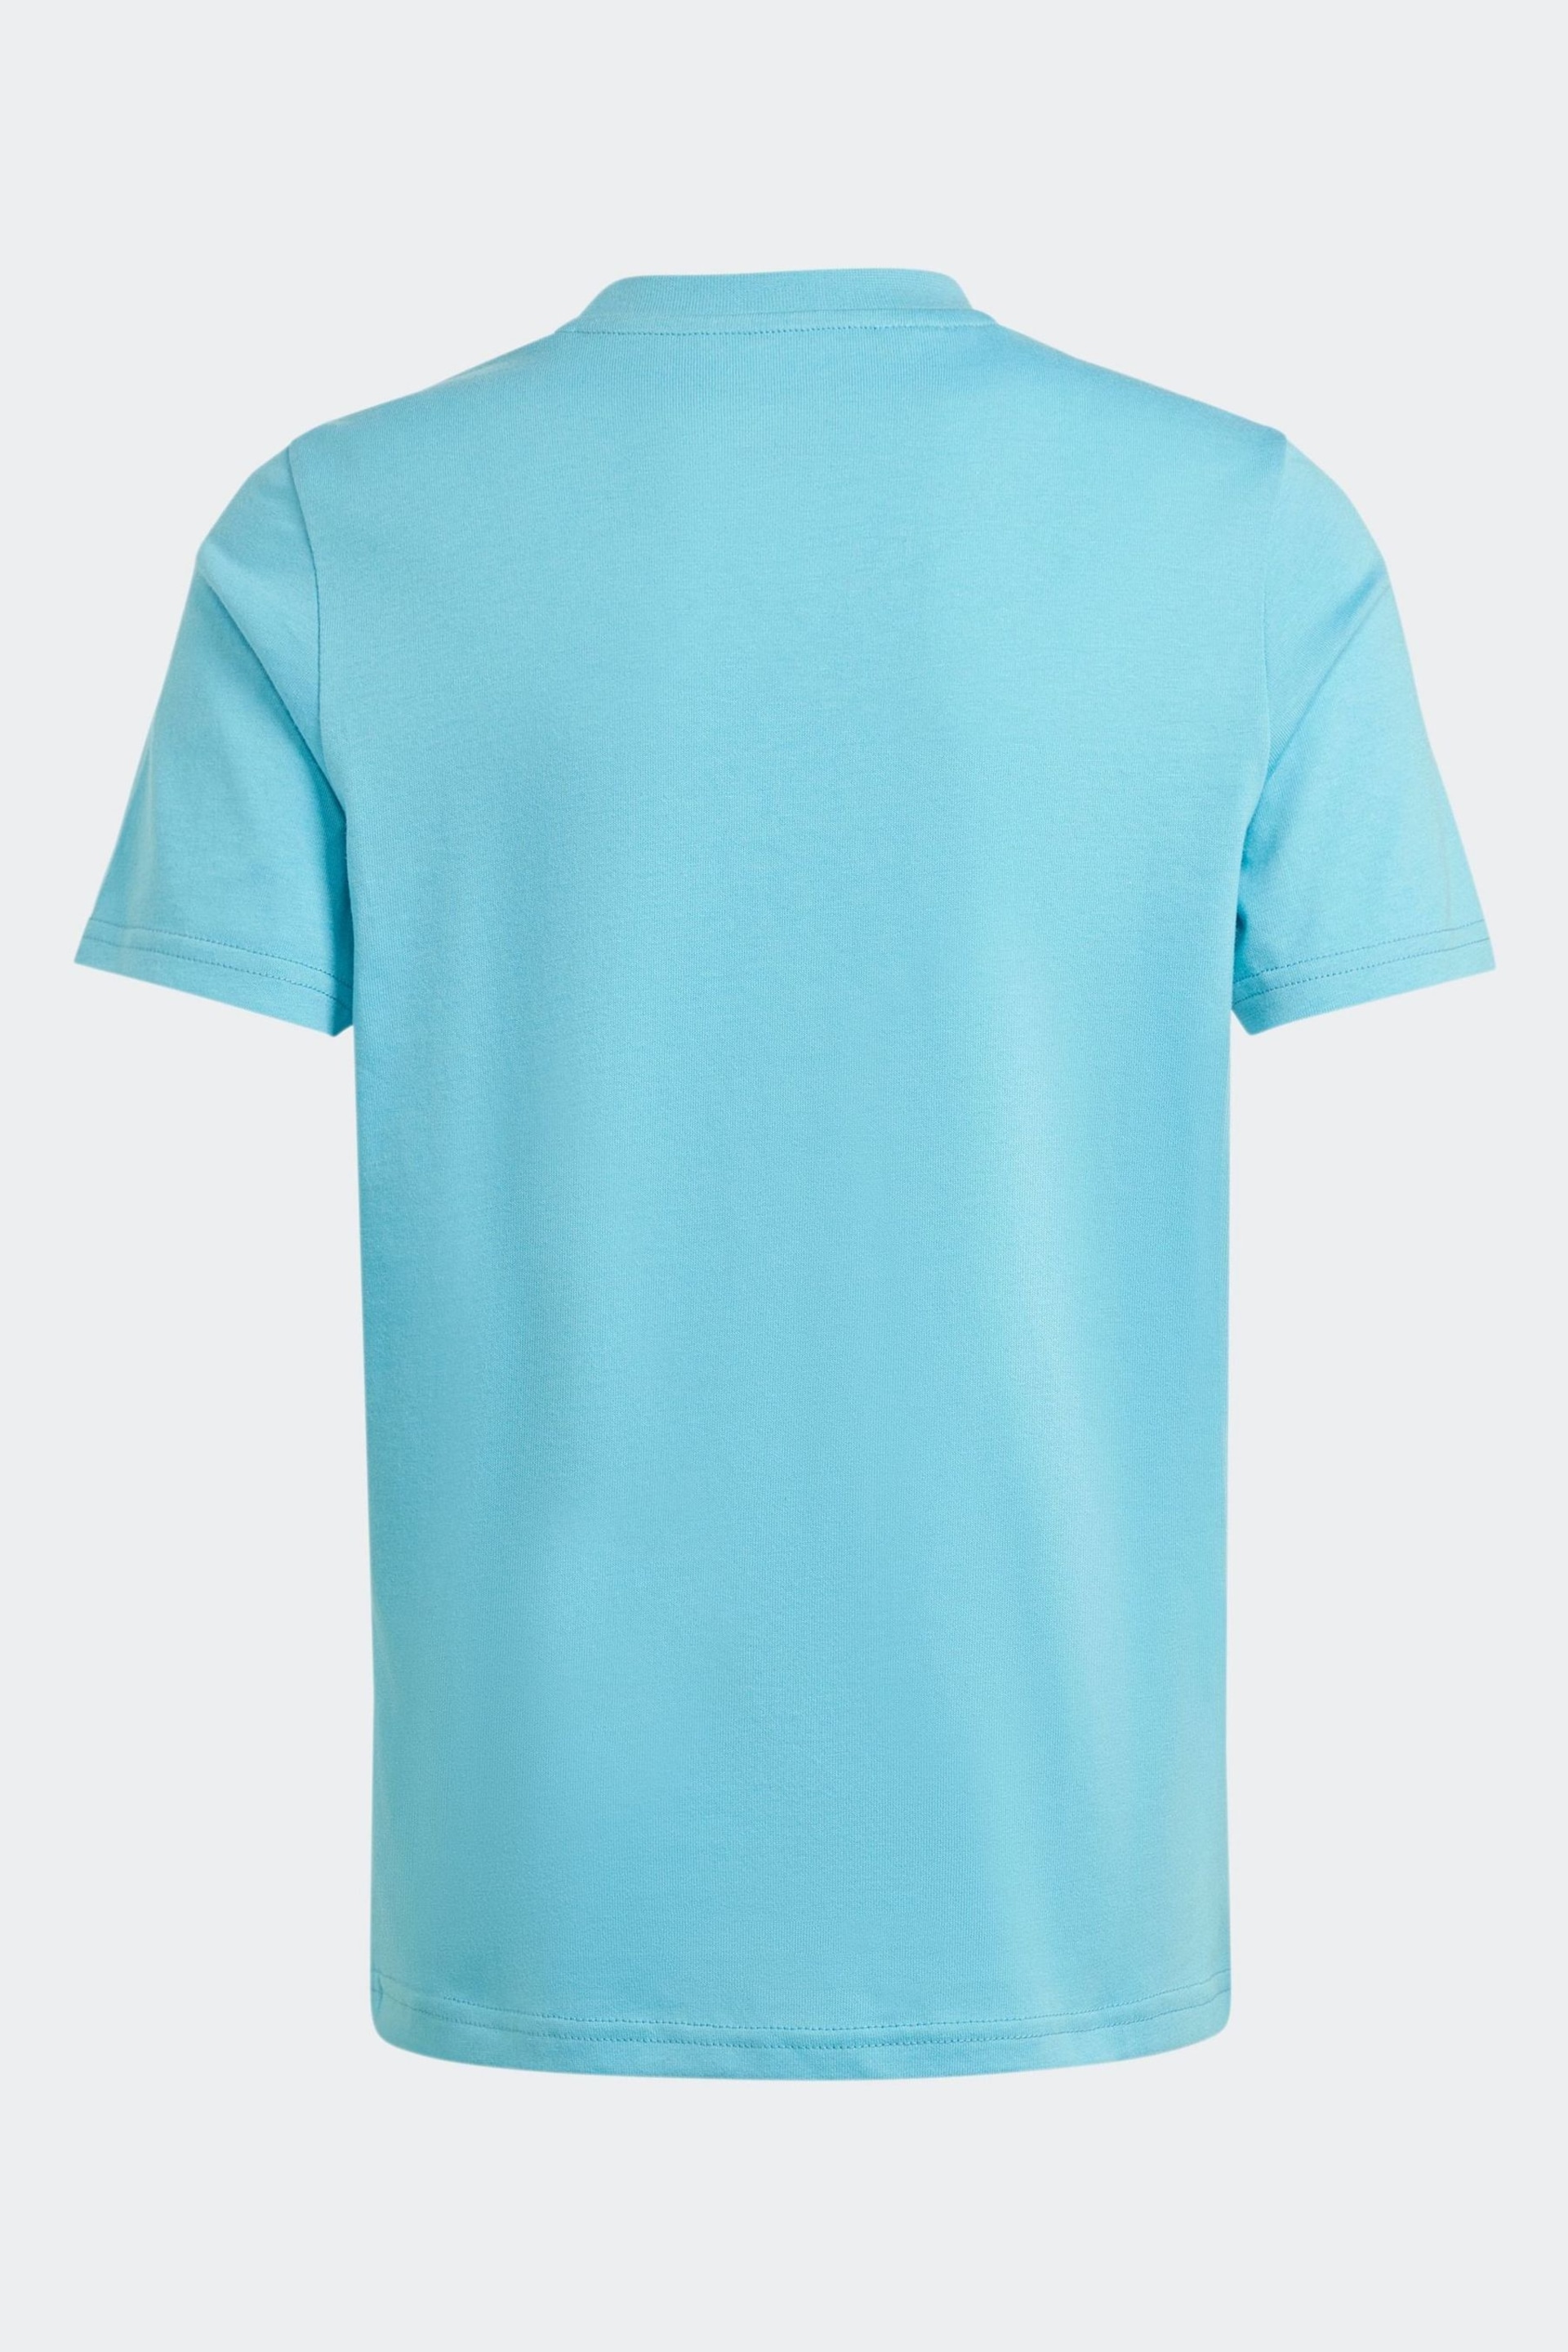 adidas Blue Kids Sportswear Camo Linear Graphic T-Shirt - Image 2 of 5